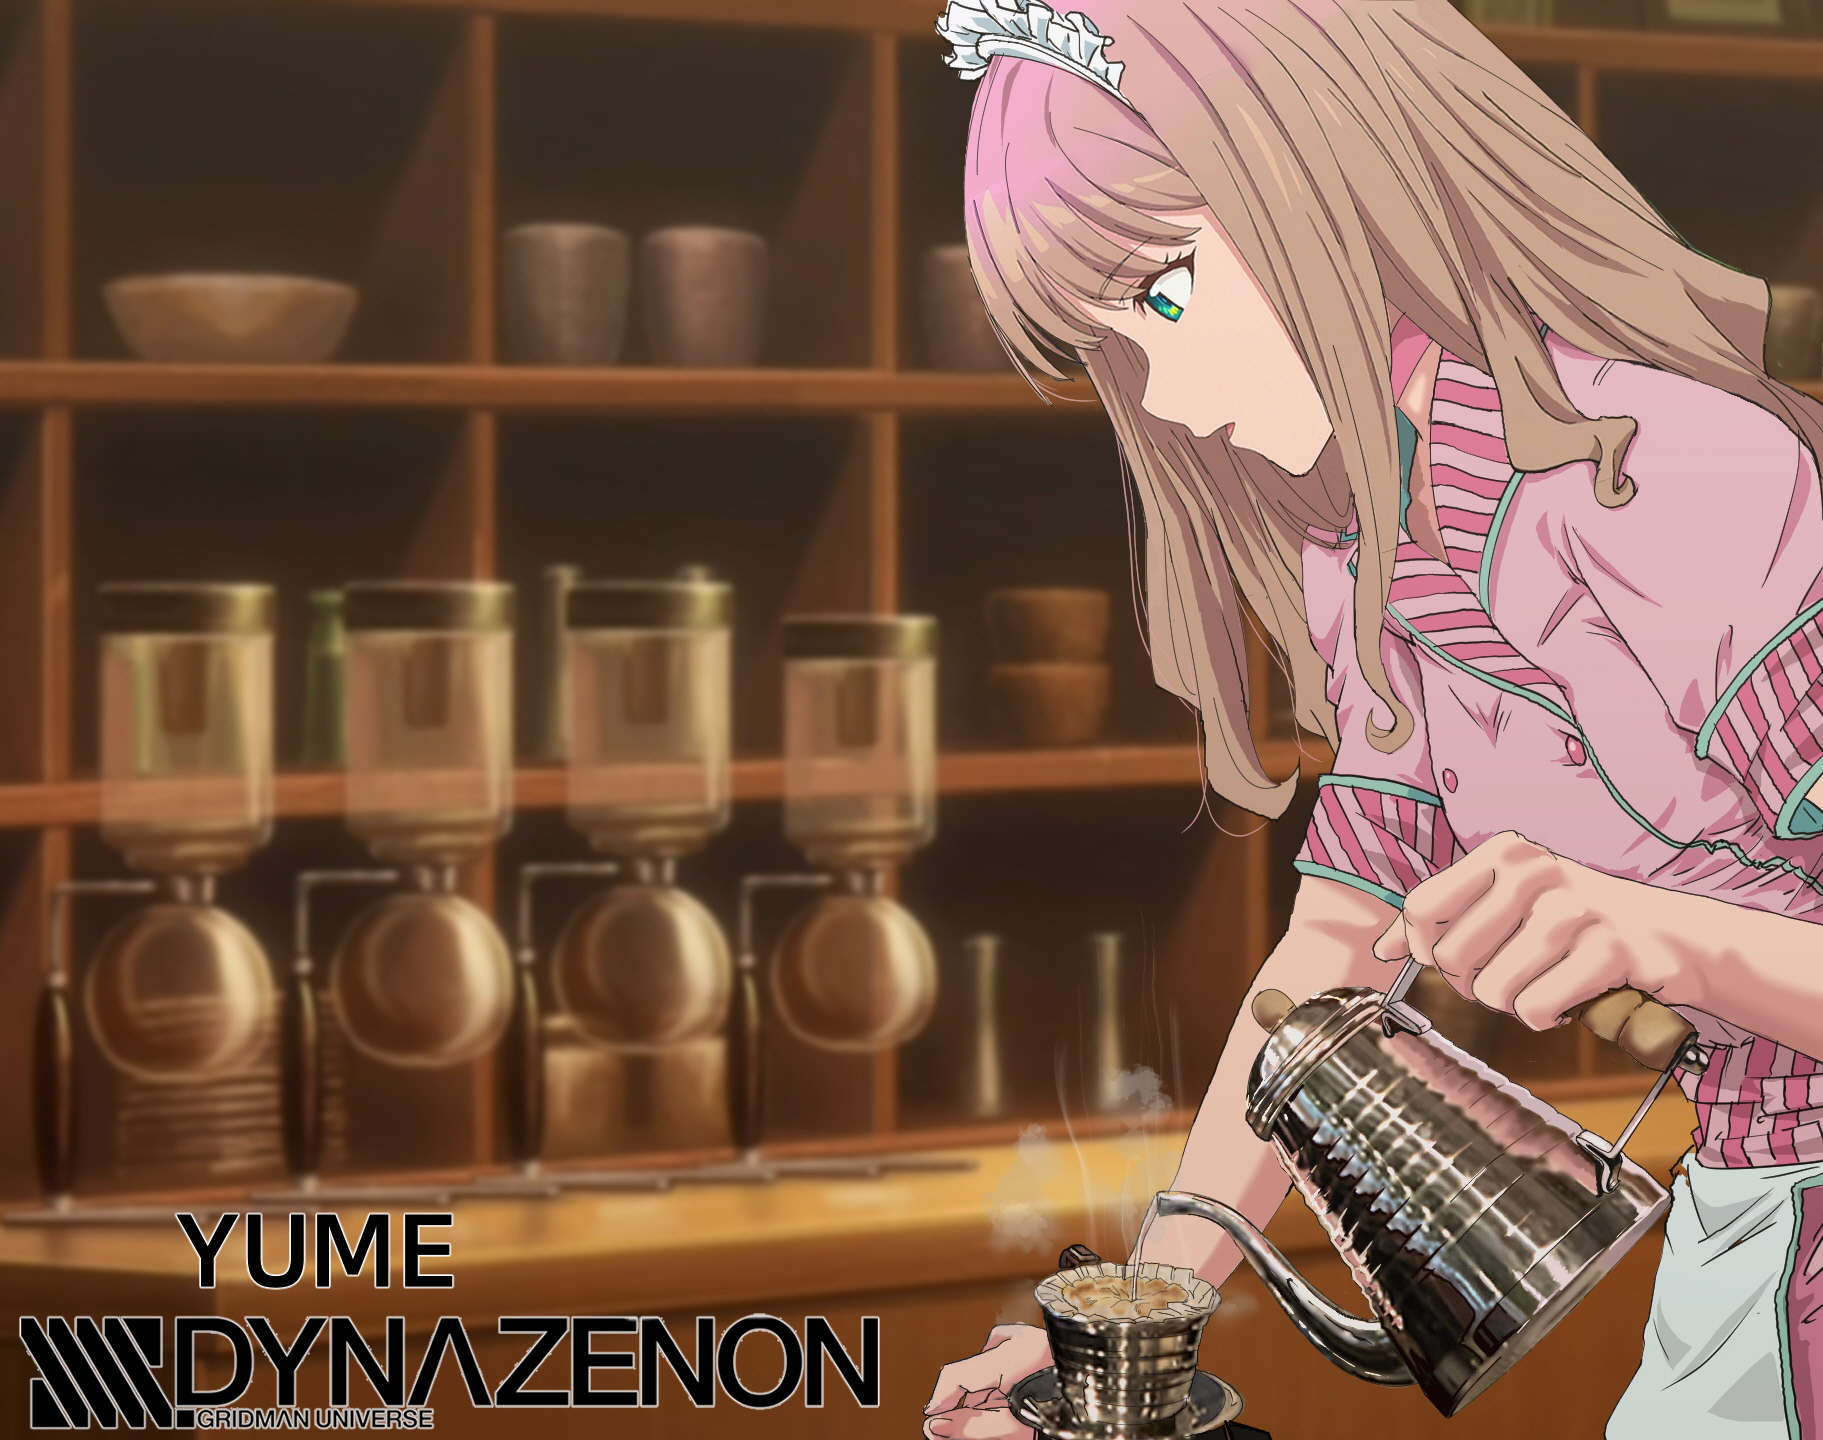 Anime 1823x1440 anime anime girls maid maid outfit SSSS.Dynazenon Minami Yume artwork digital art fan art long hair brunette